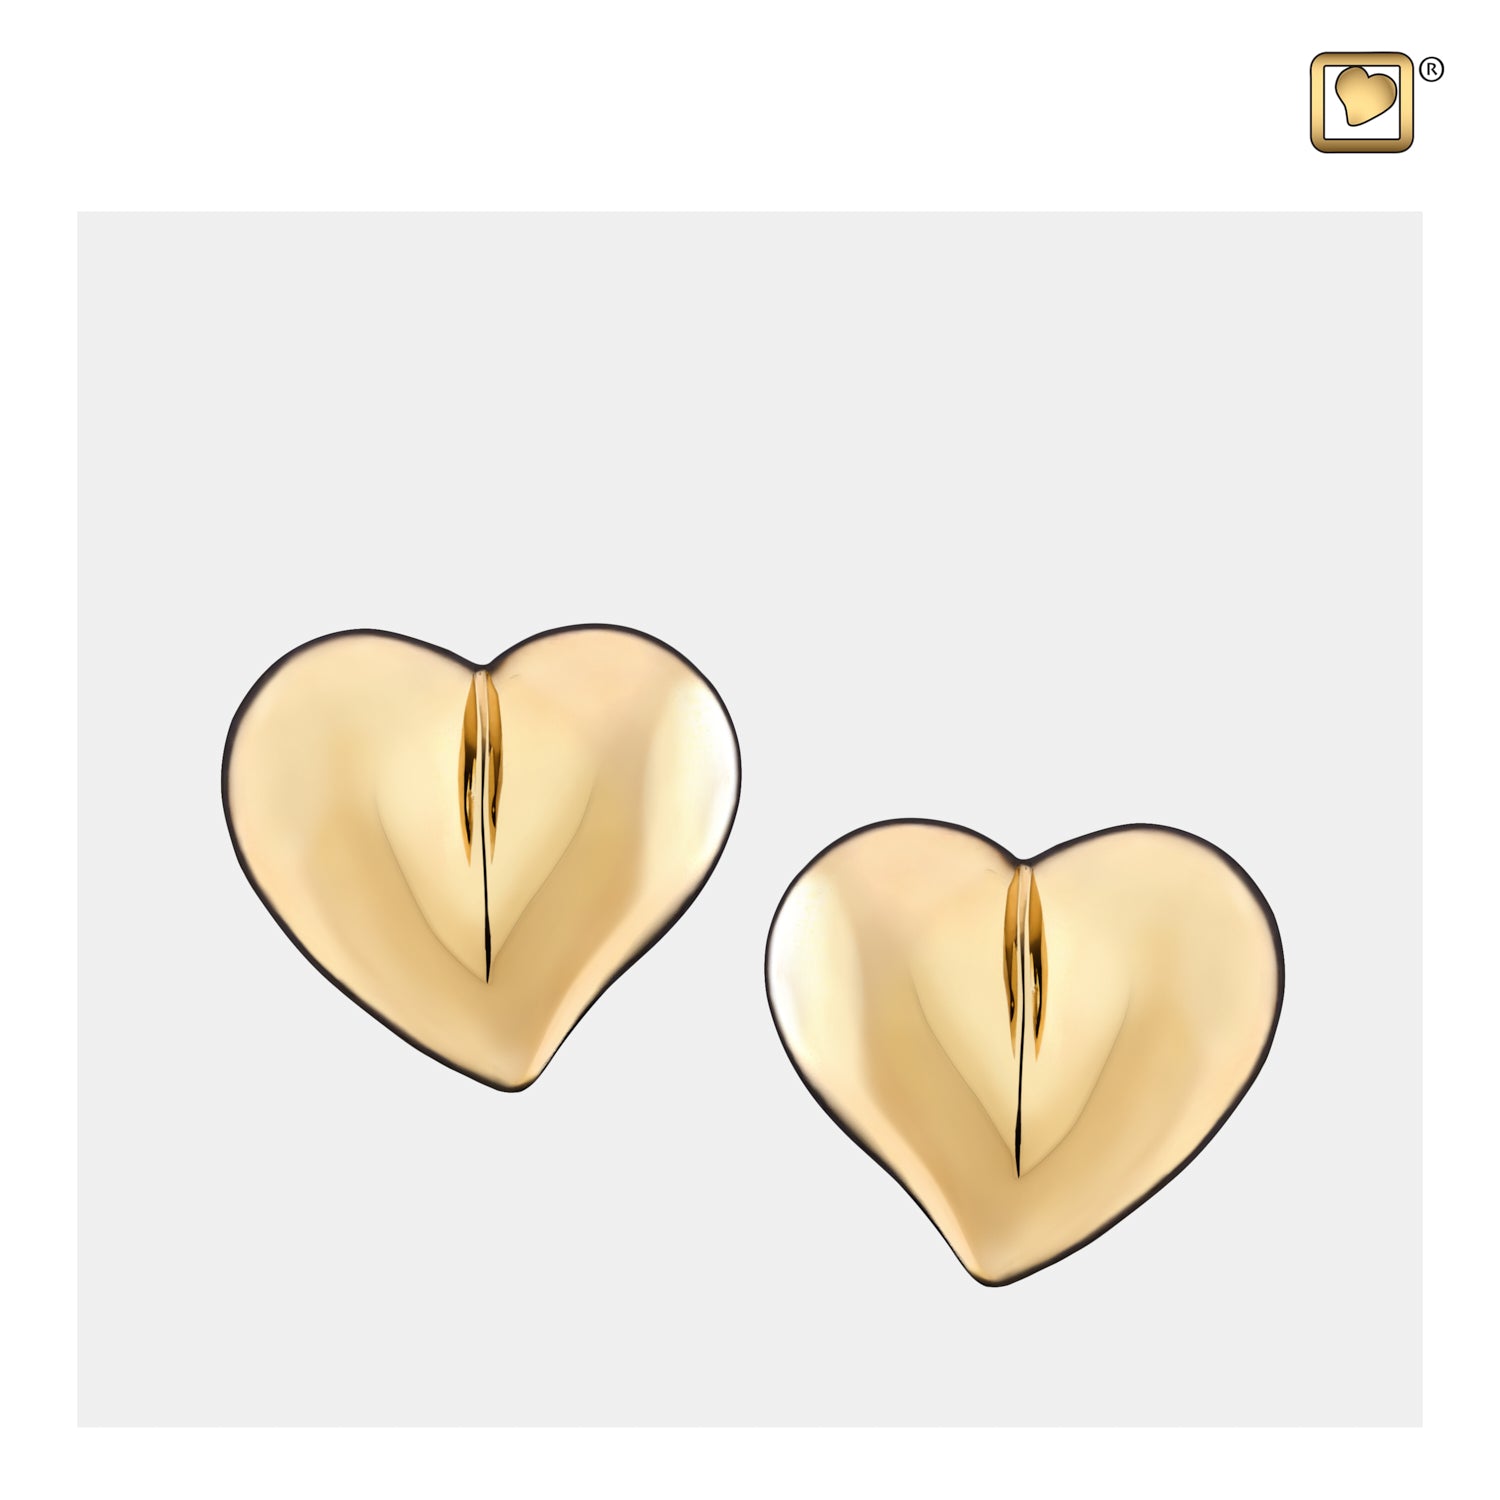 LoveHeart™ Gold Vermeil Sterling Silver Stud Earrings